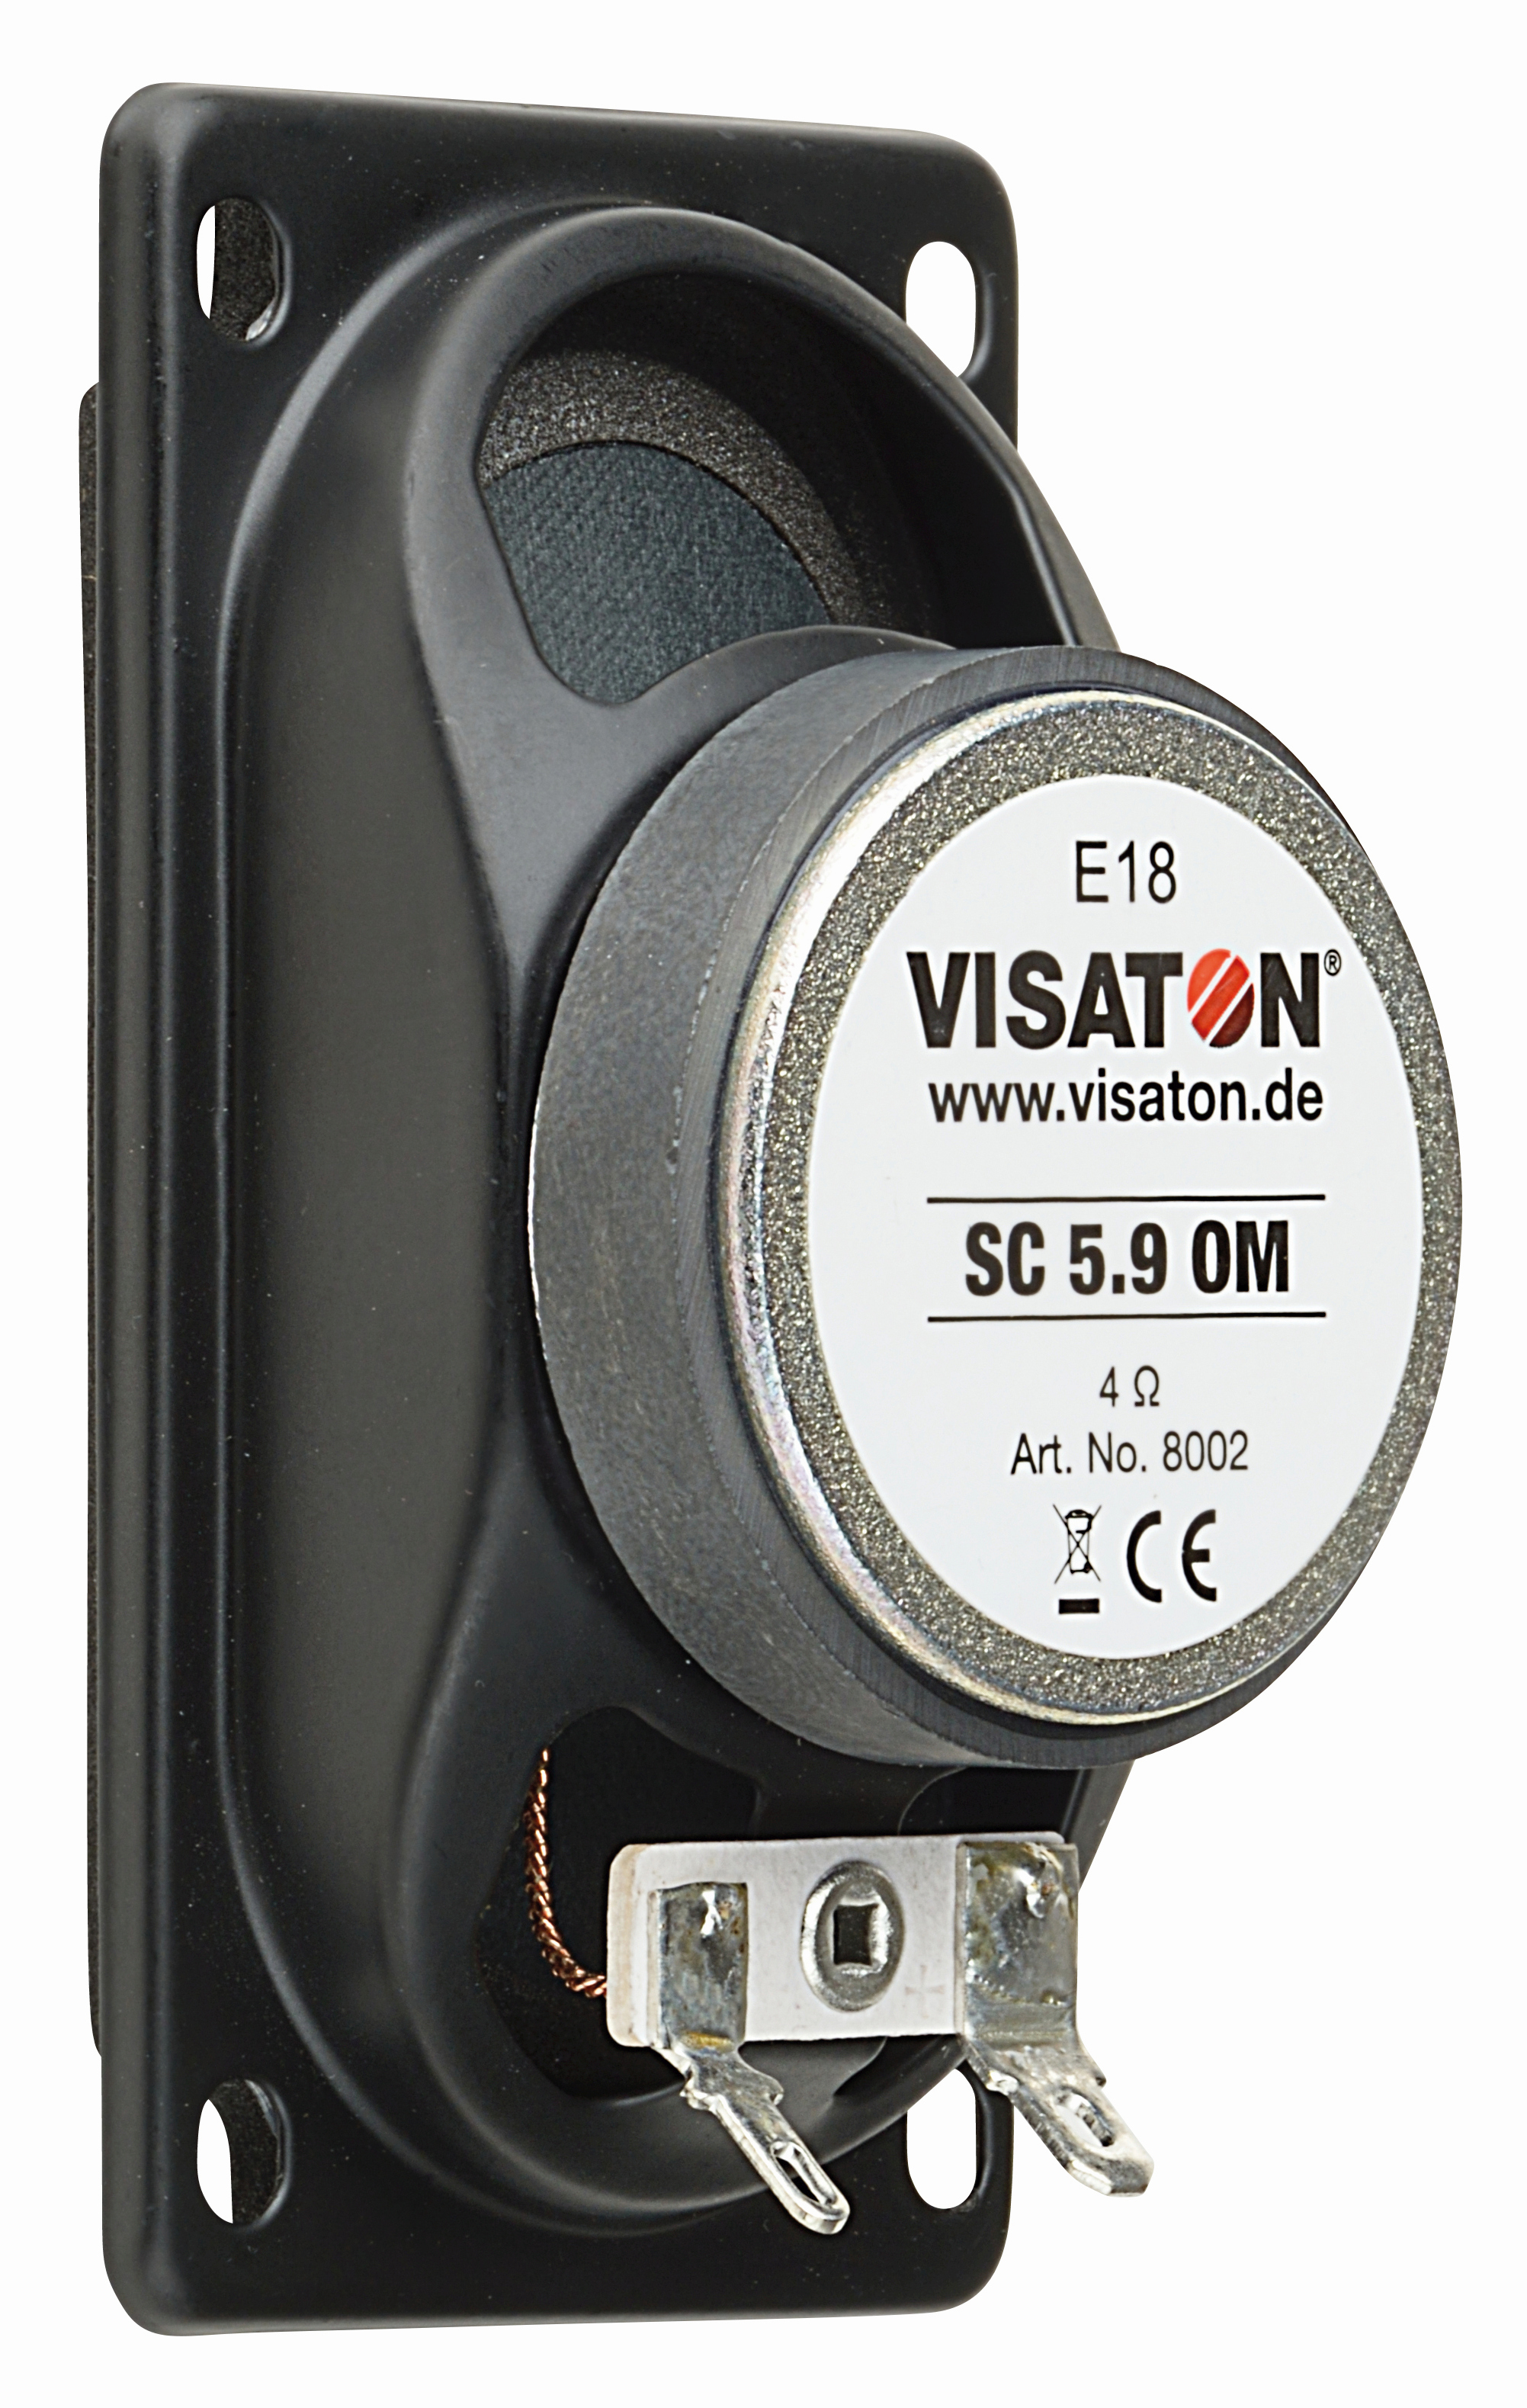 8 Ohm 15 W Visaton Full-range speaker 5 x 9cm SC 5.9 OM, 8 OHM 2" x 3.5" 